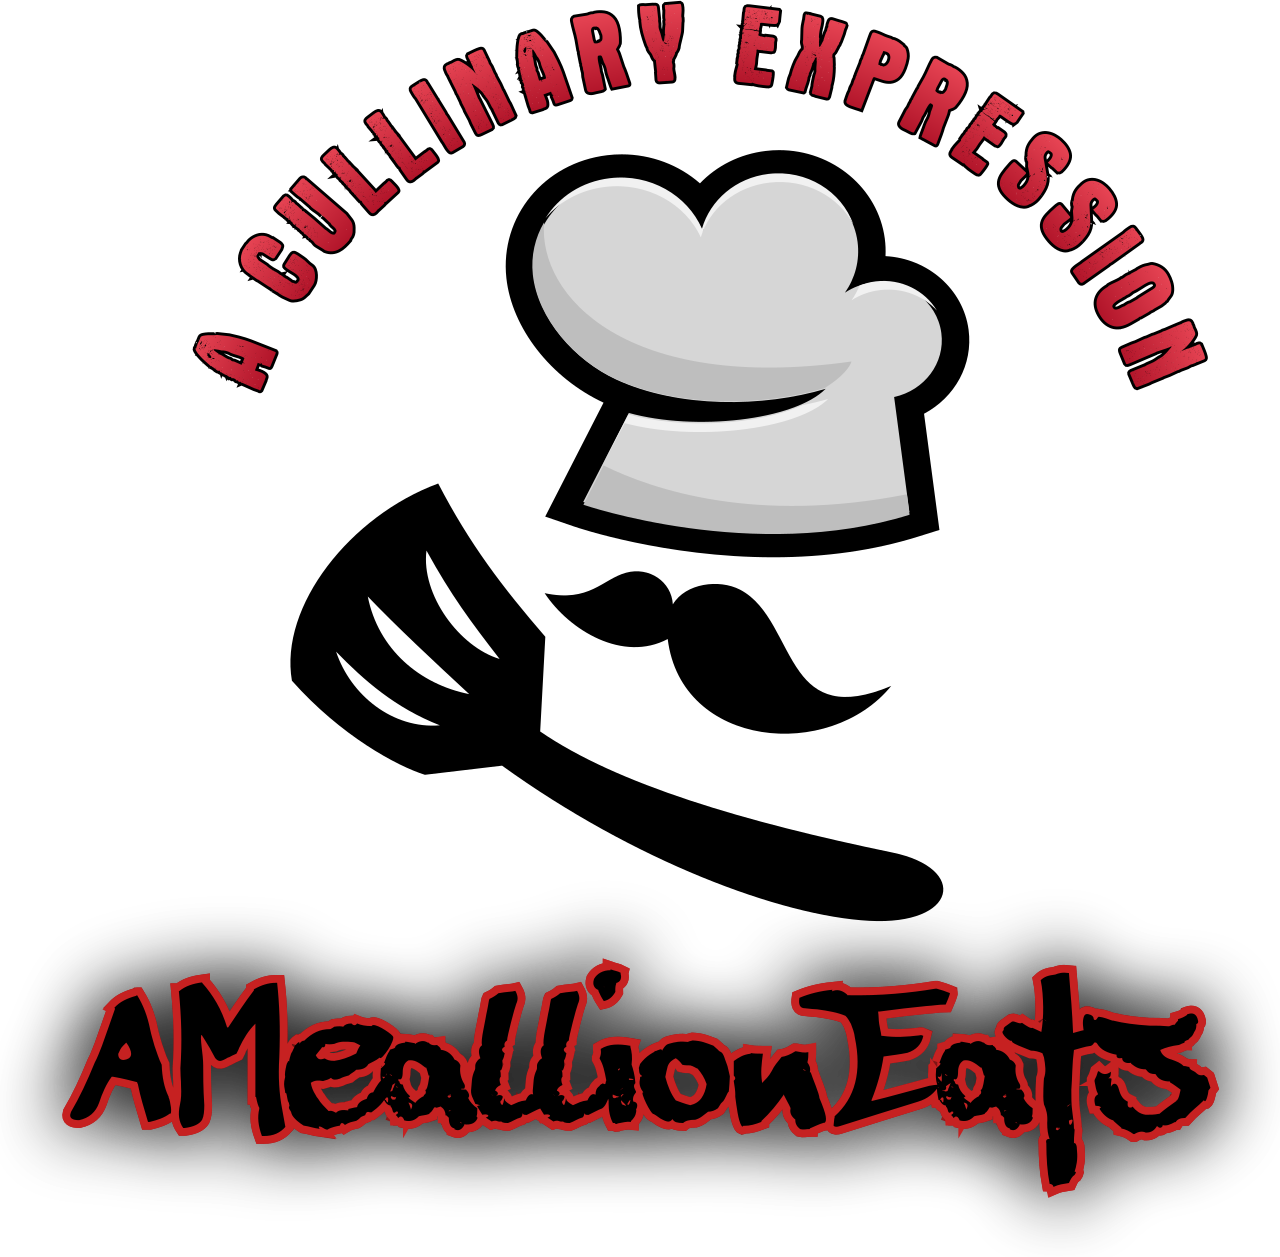 AMeallionEats's logo